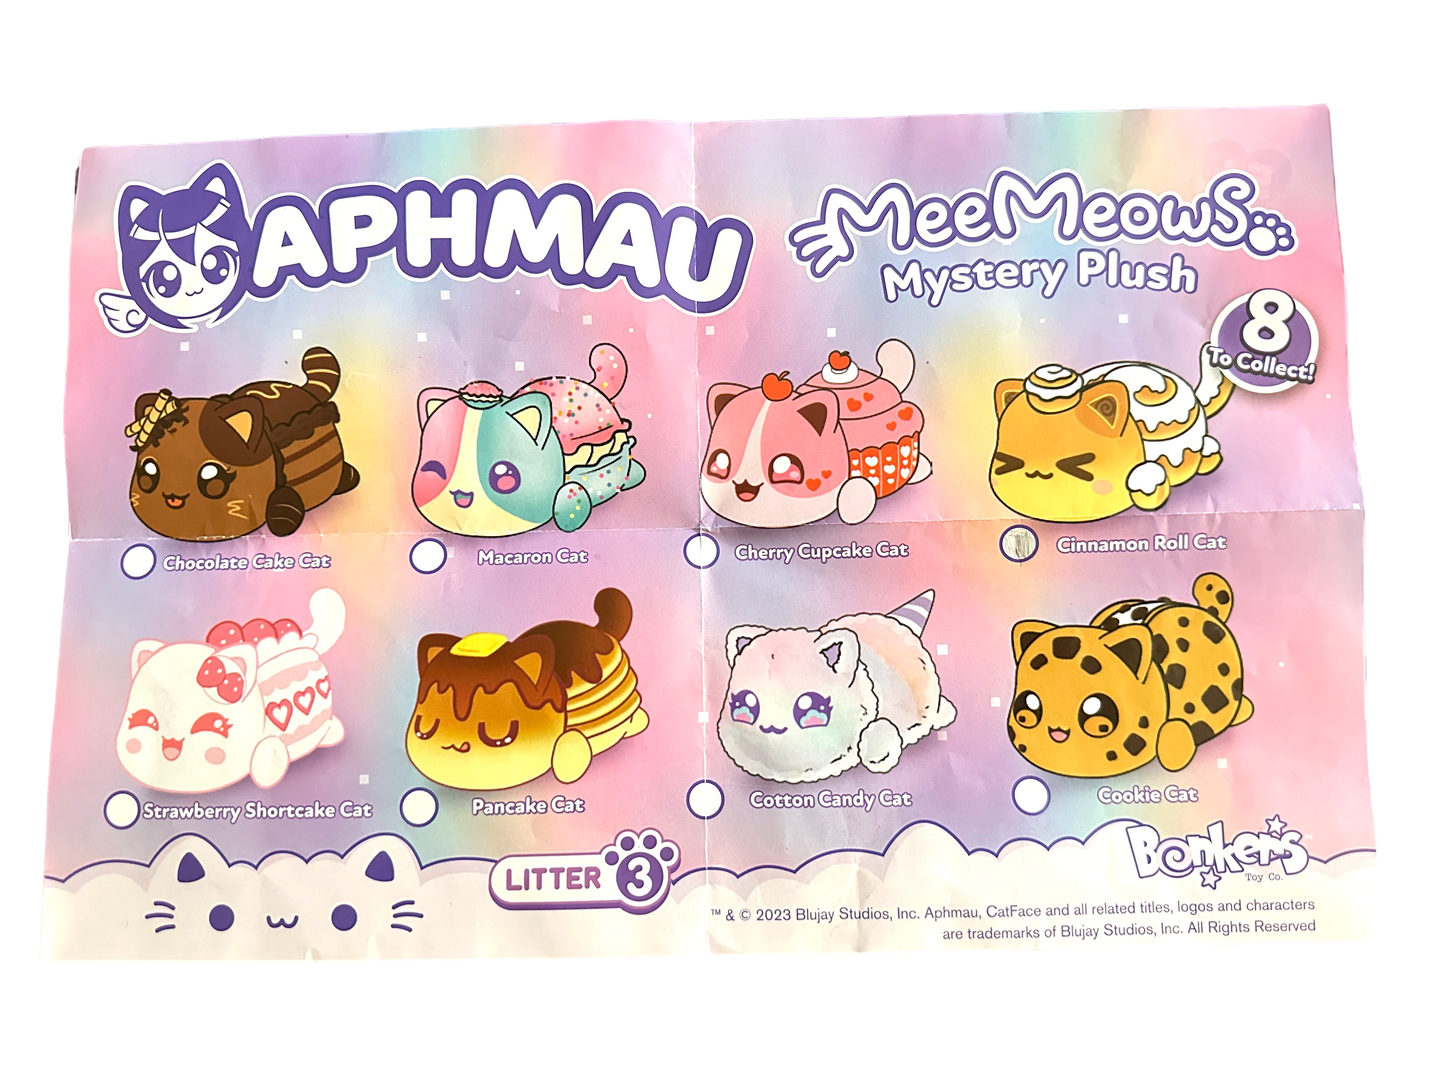 MACARON CAT - MeeMeows Litter 3 from Aphmau (BRAND NEW) RARE Kitty Plushie!